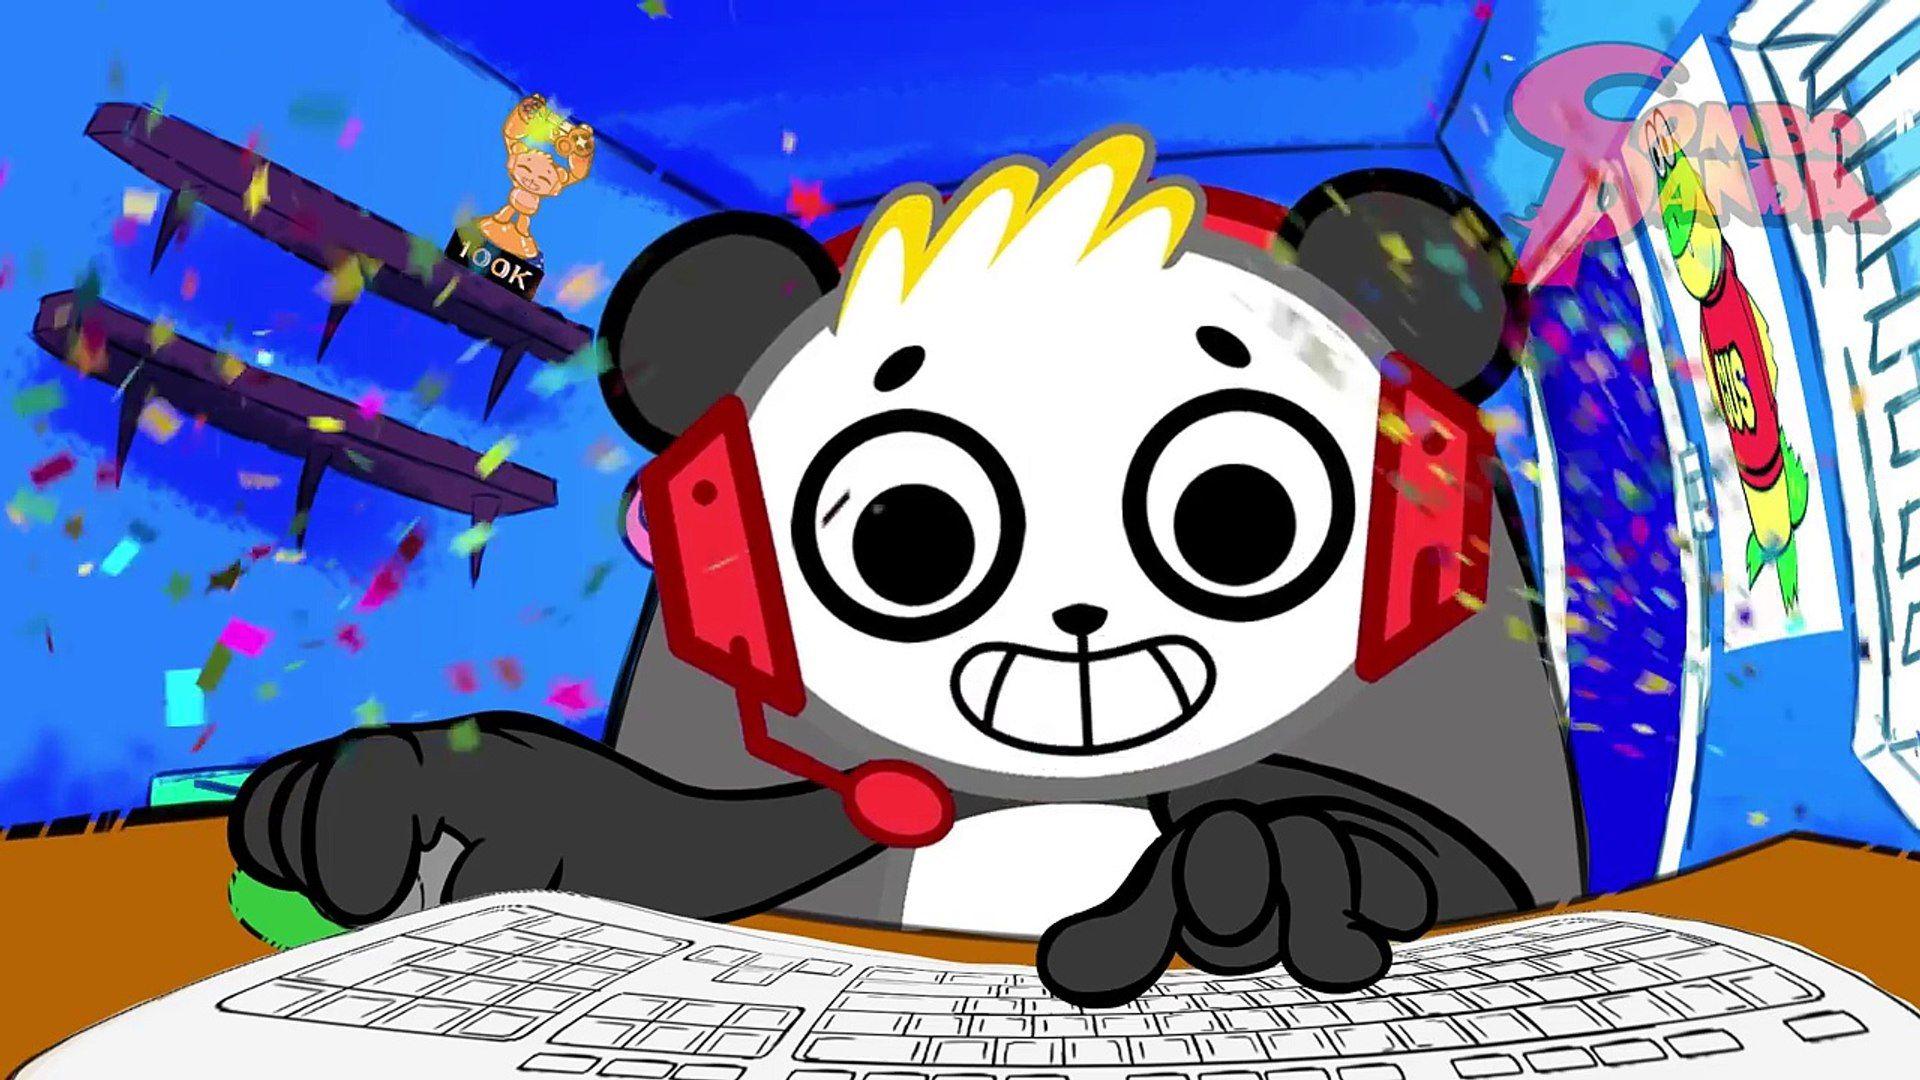 Combo Panda Wallpapers Top Free Combo Panda Backgrounds Wallpaperaccess - ryan and combo panda playing roblox